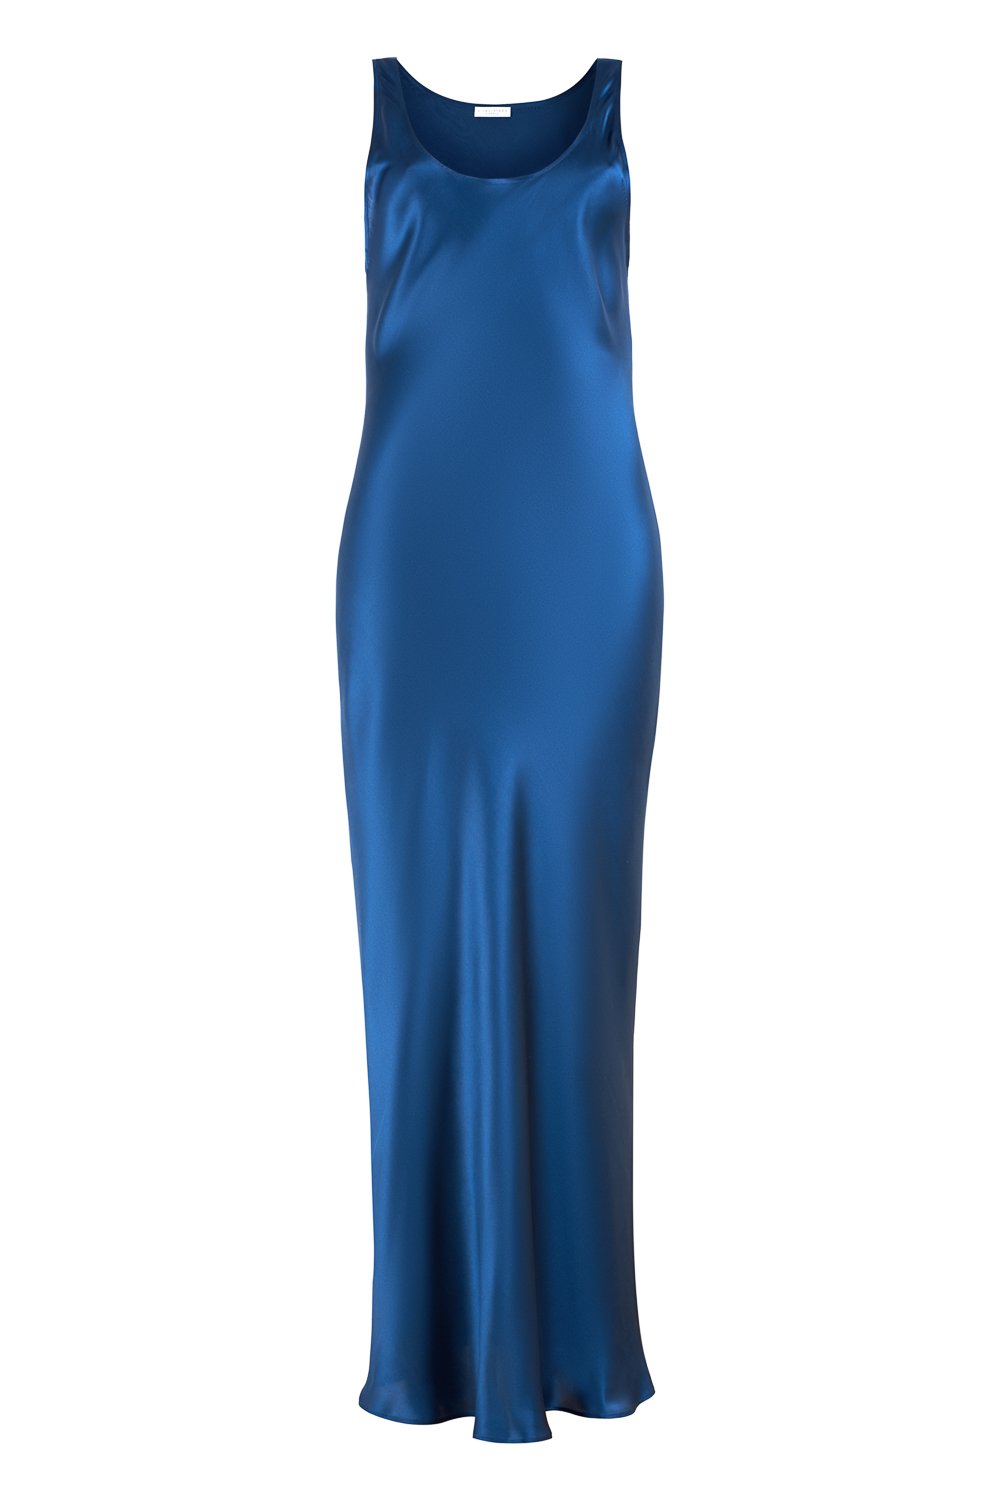 Silk Dress in Navy Blue  - NEW ARRIVAL - silk&jam